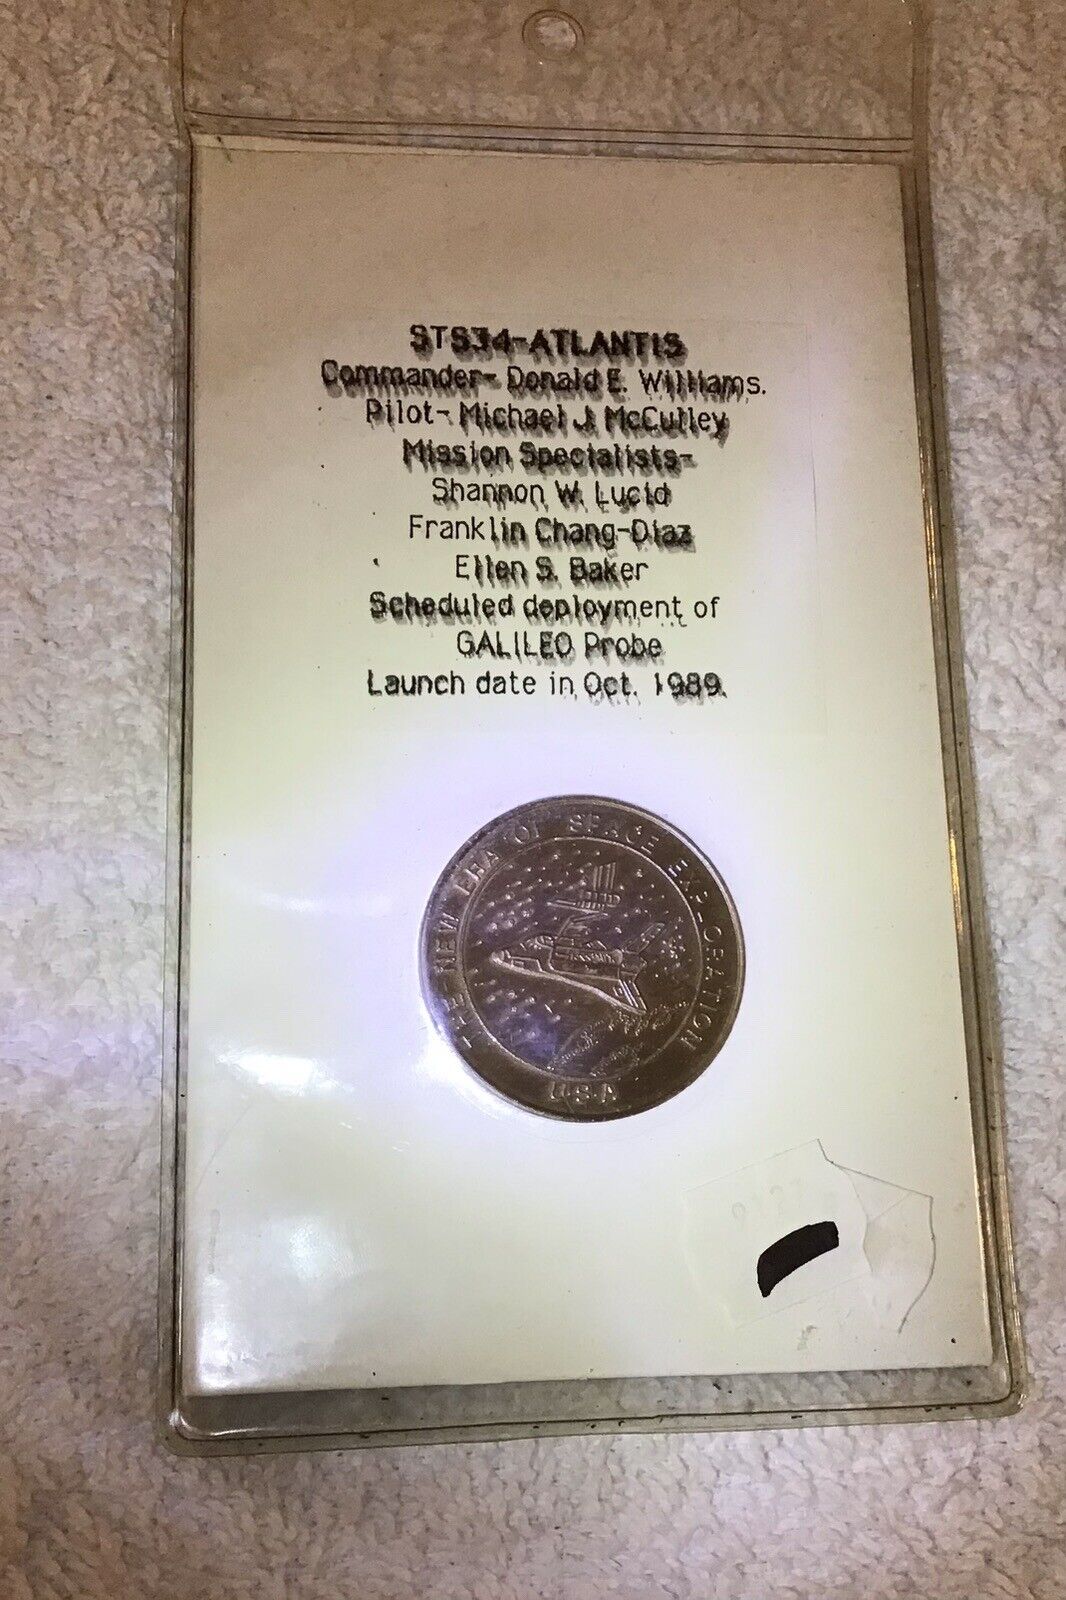 NASA STS-34 Atlantis Shuttle Crew Emblem Solid Bronze Coin